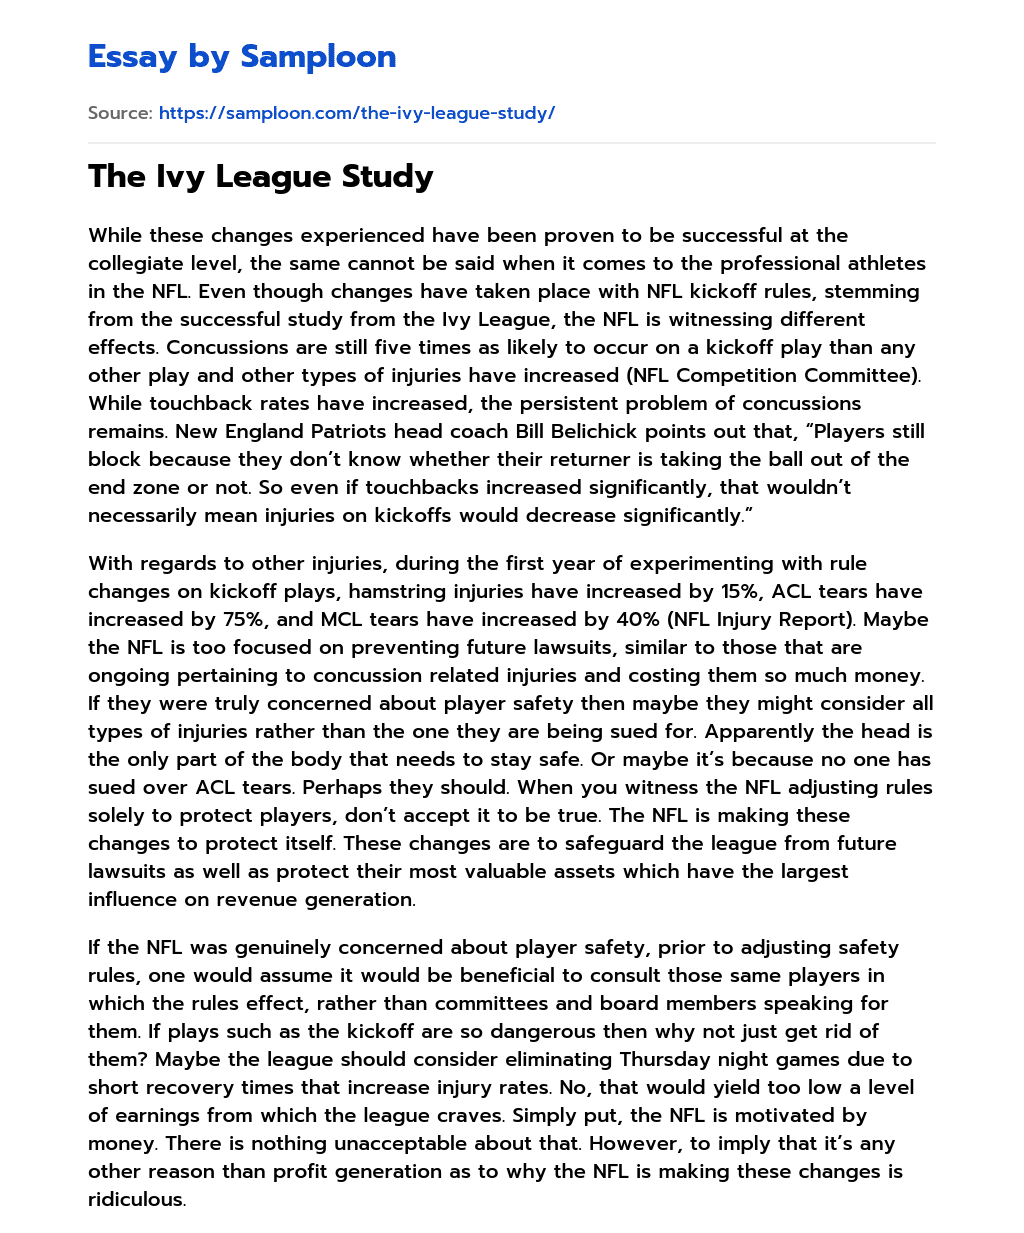 The Ivy League Study essay